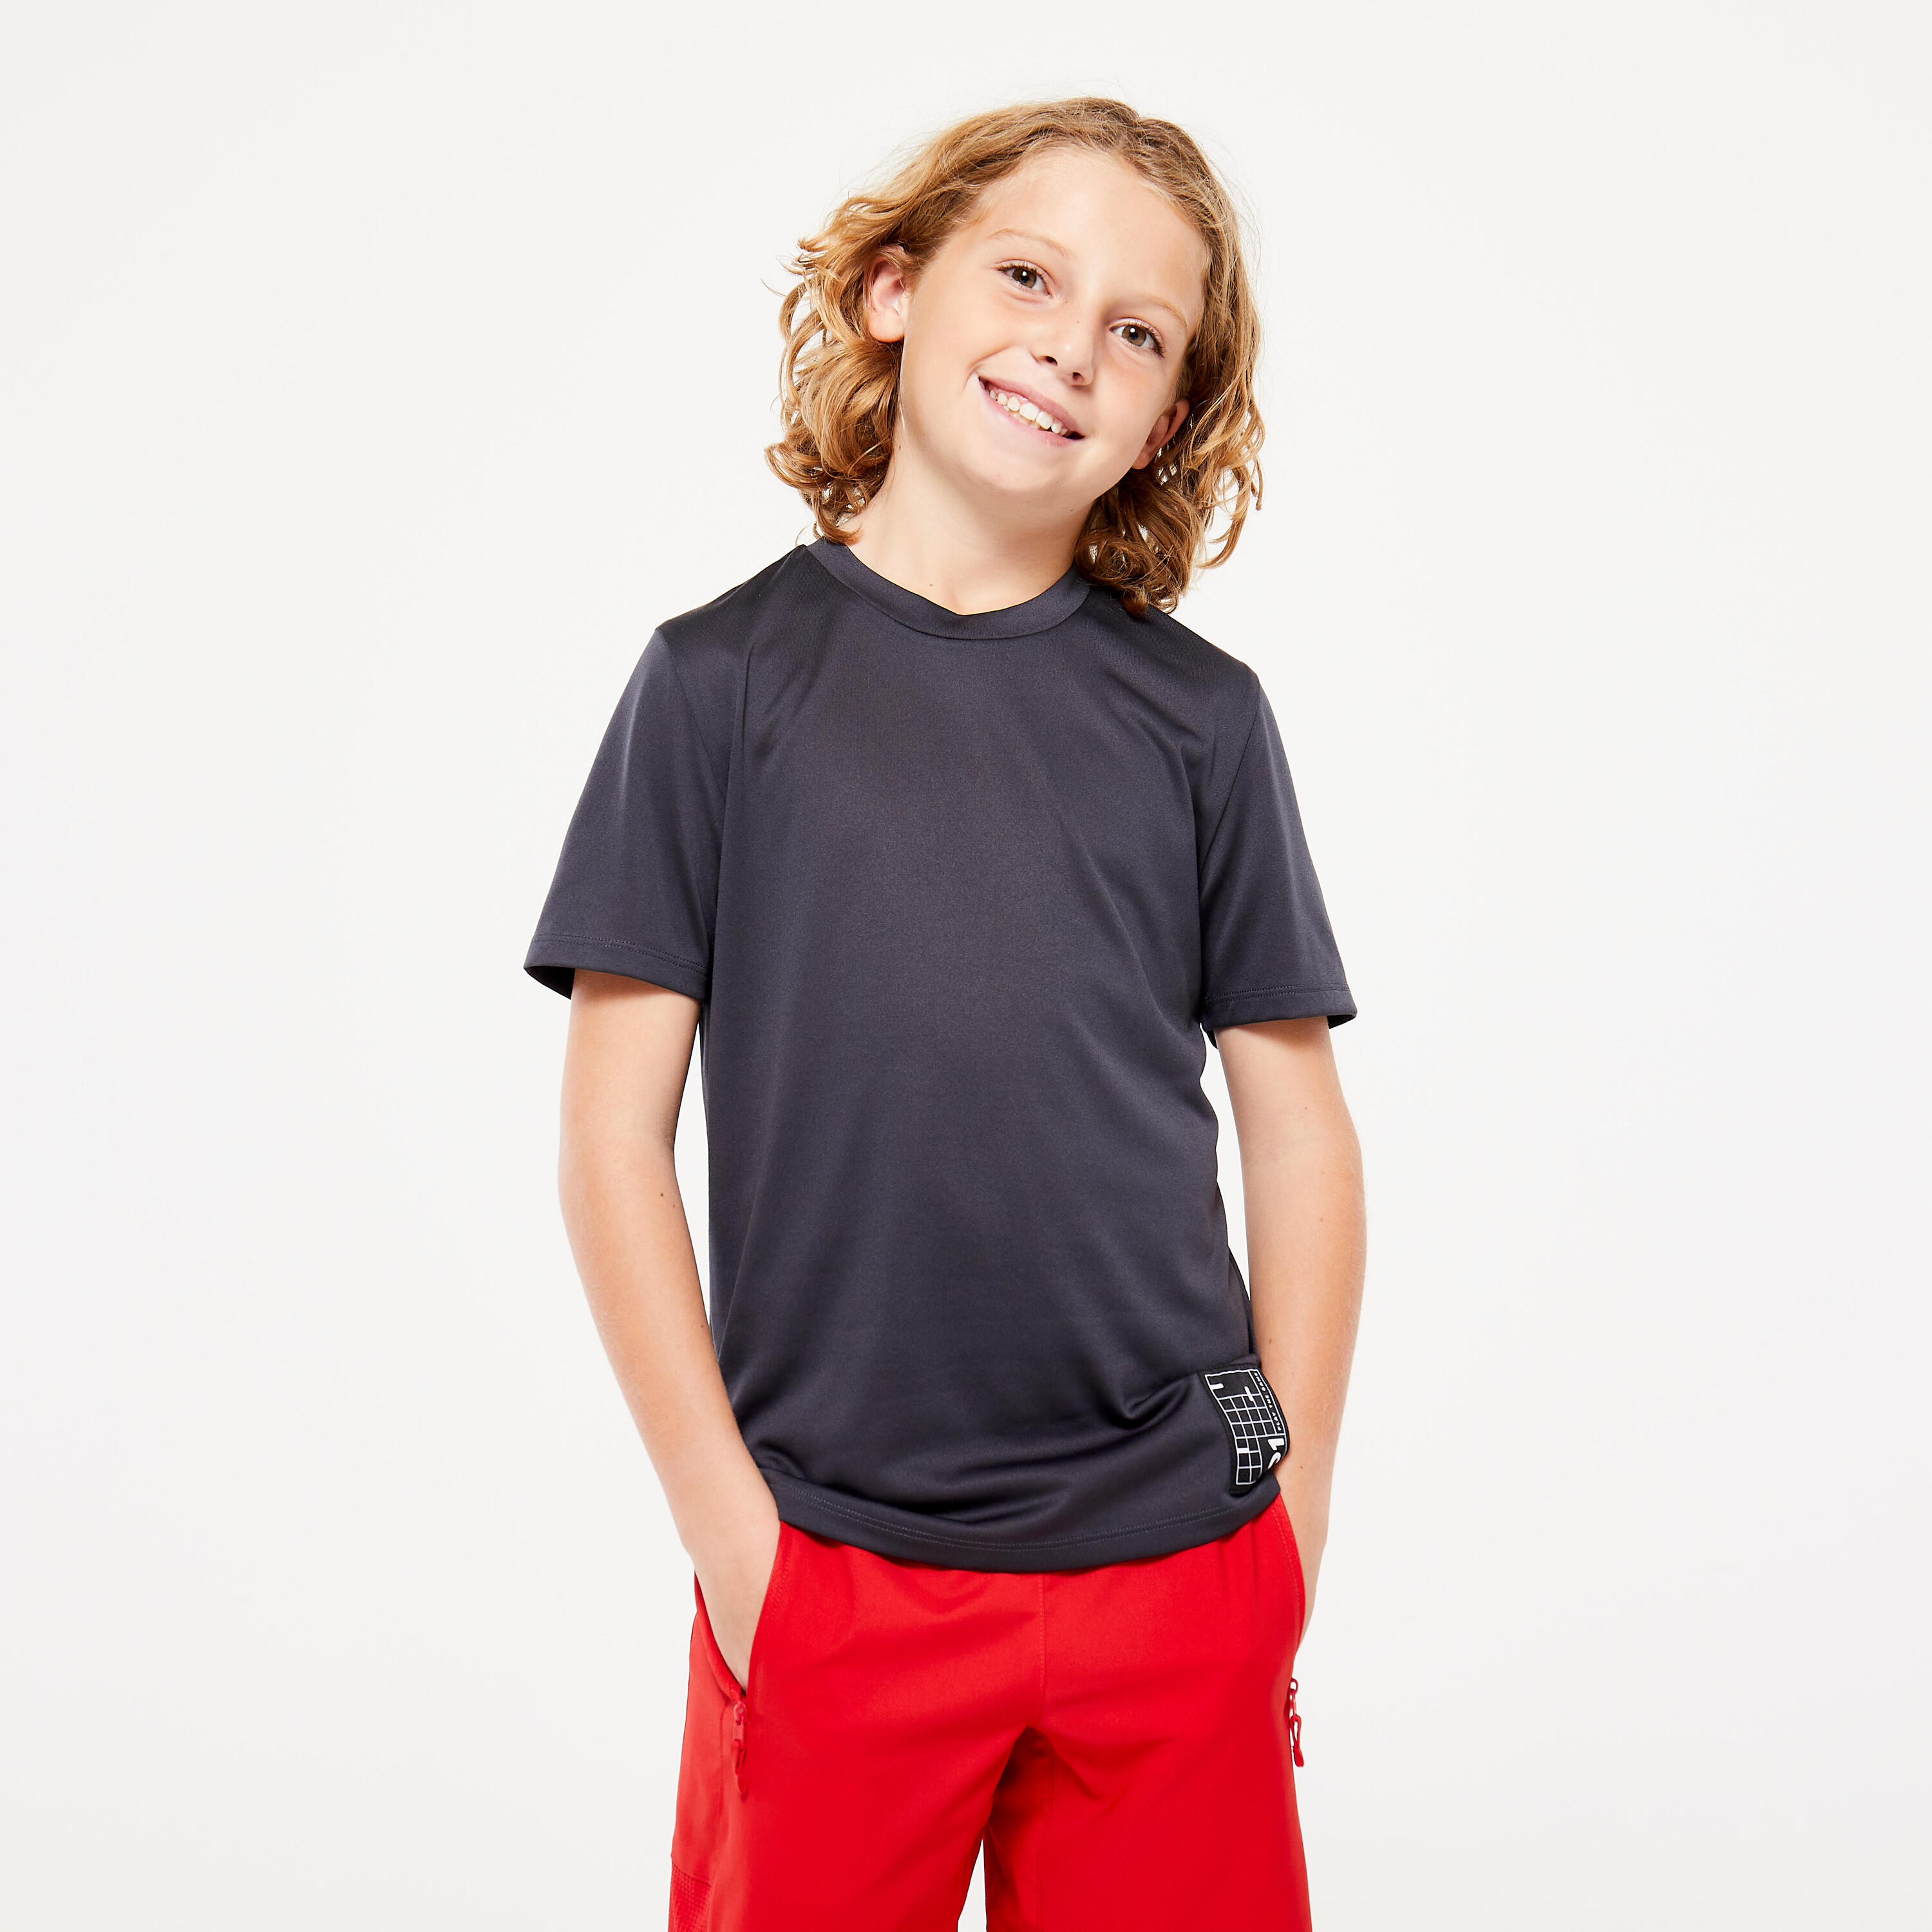 DECATHLON Kids' Technical T-Shirt - Carbon Grey